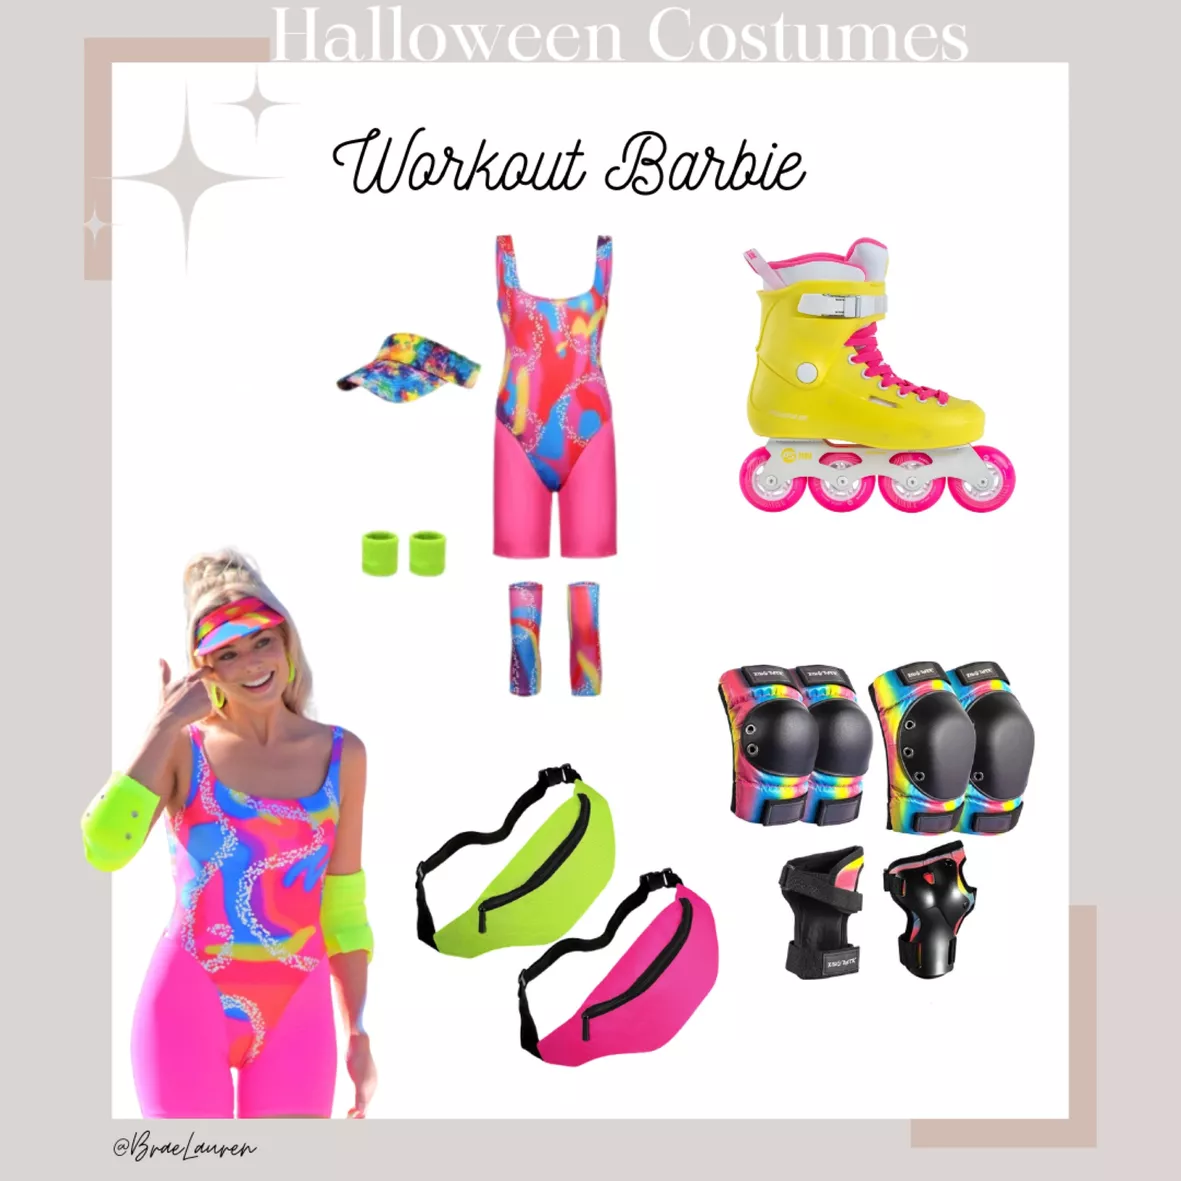 Workout Barbie costume  Barbie halloween costume, Barbie costume